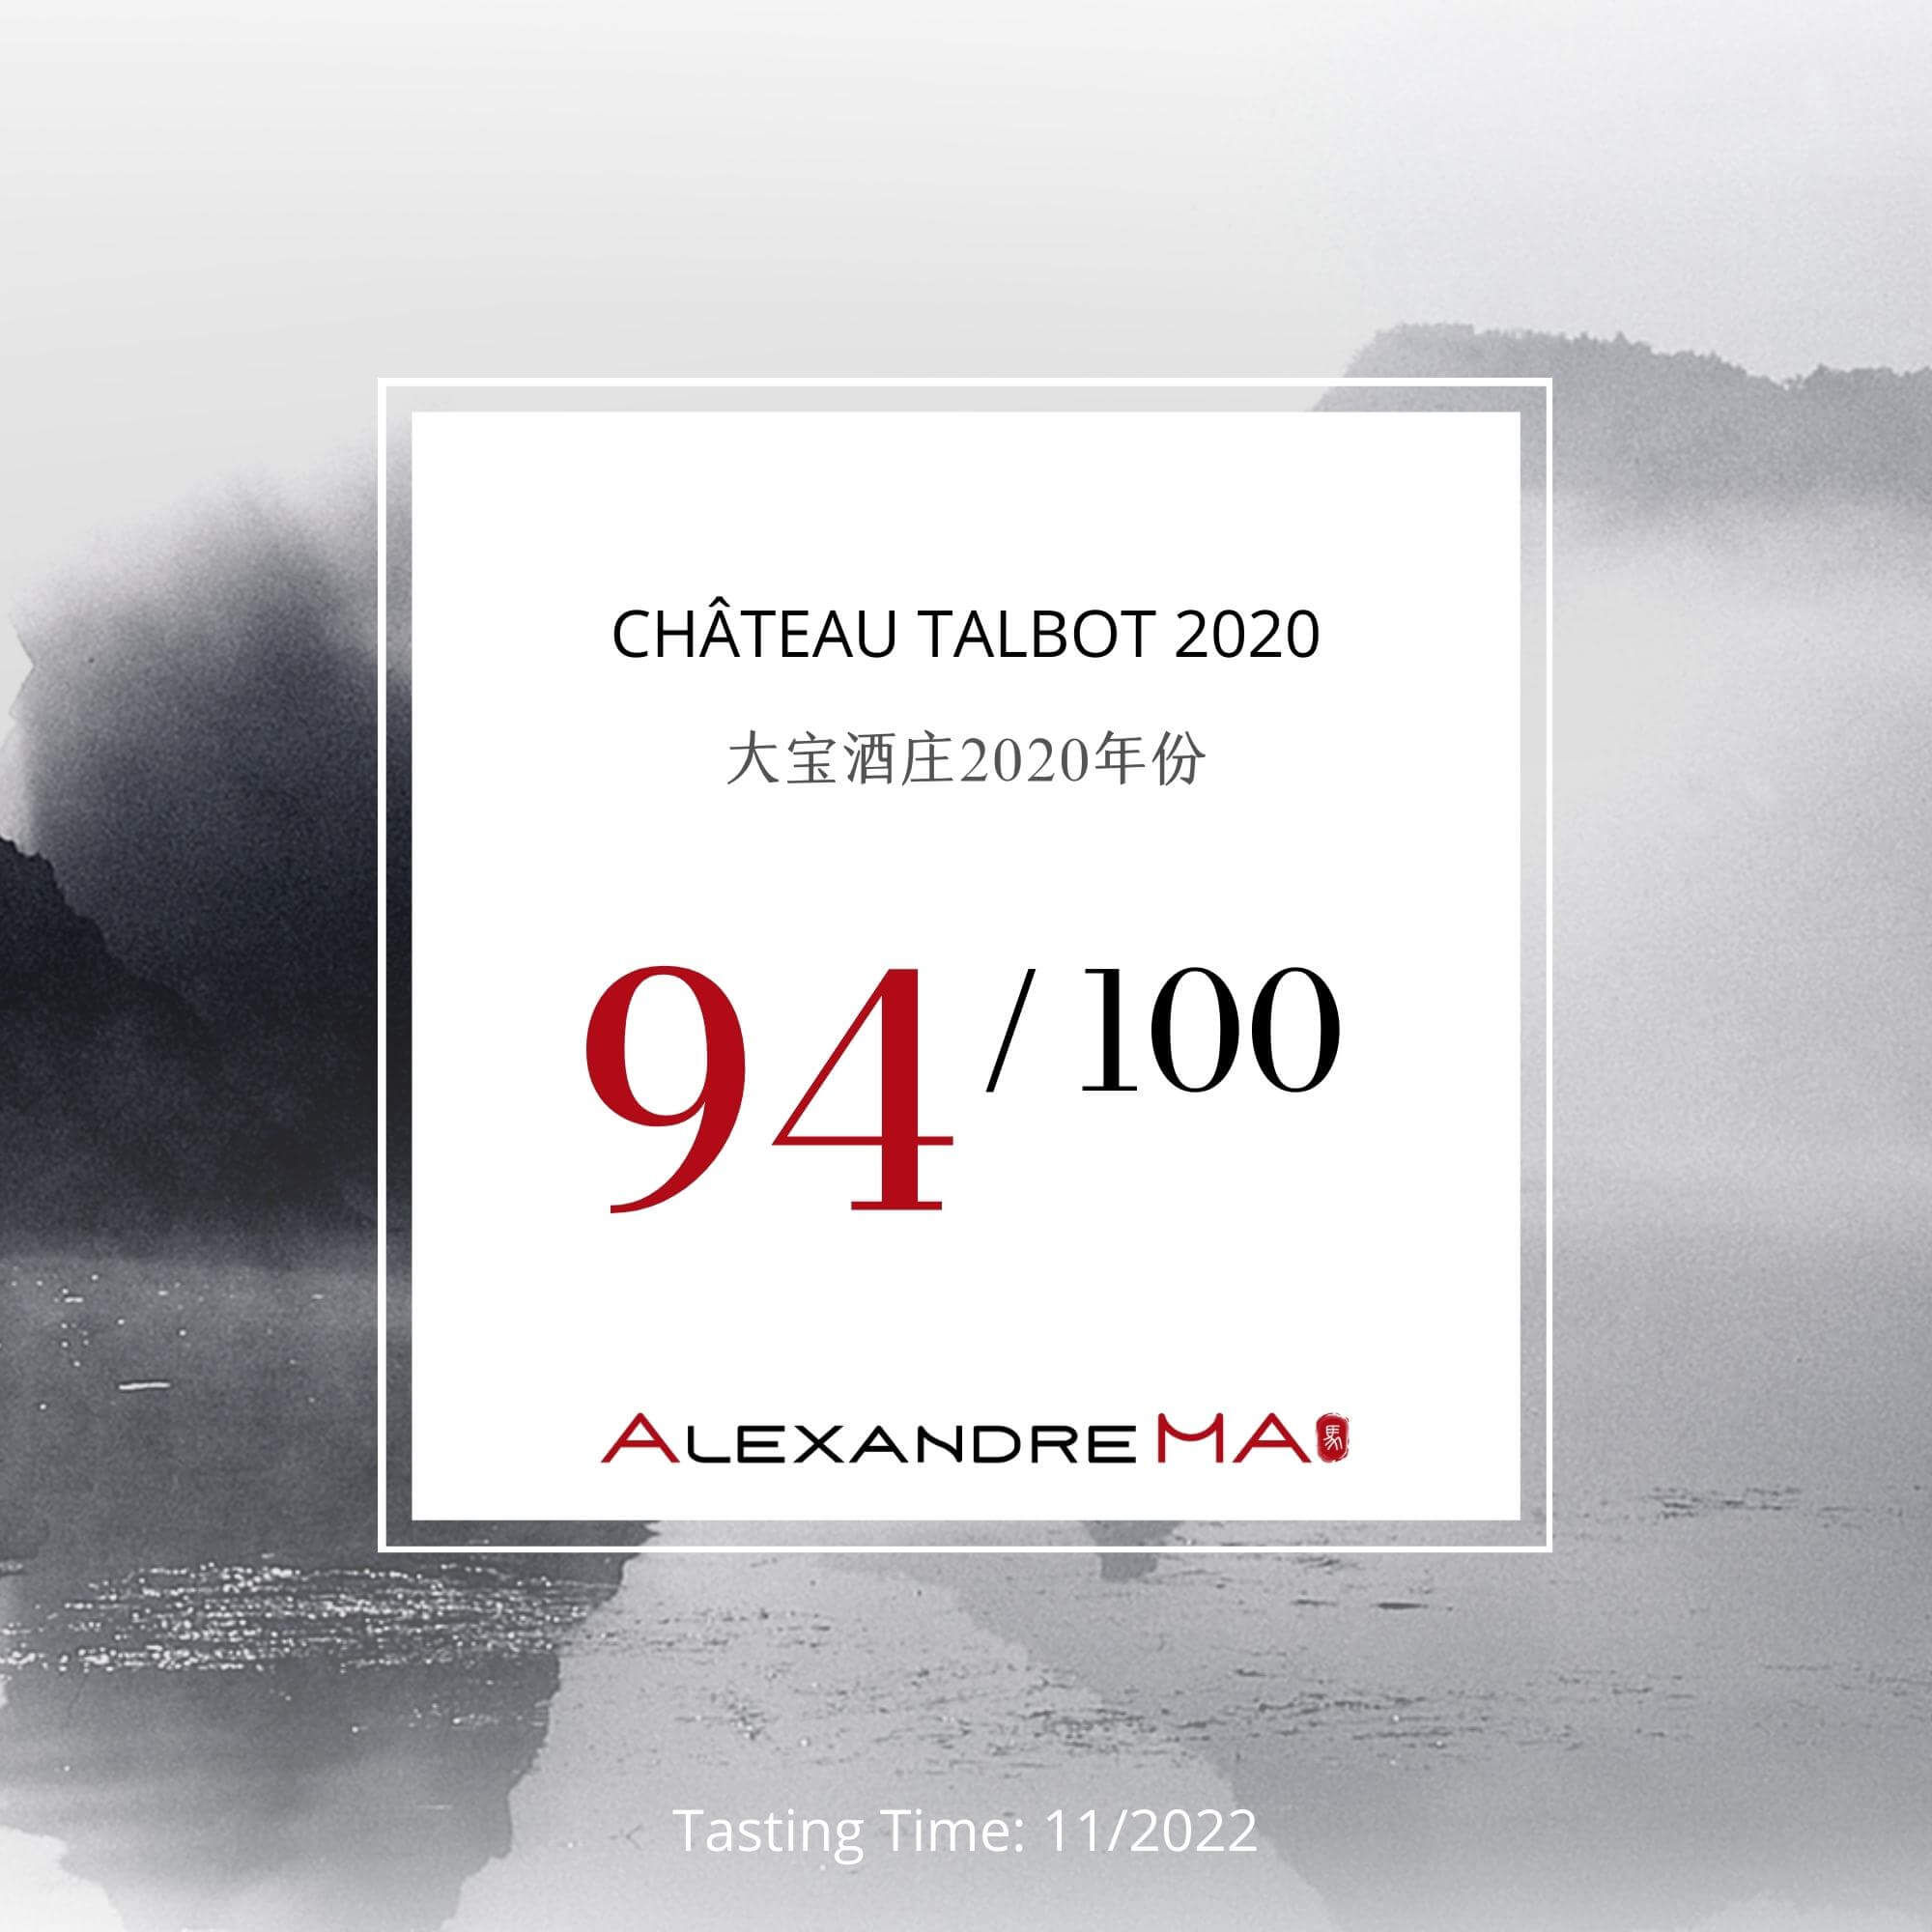 Château Talbot 2020 - Alexandre MA